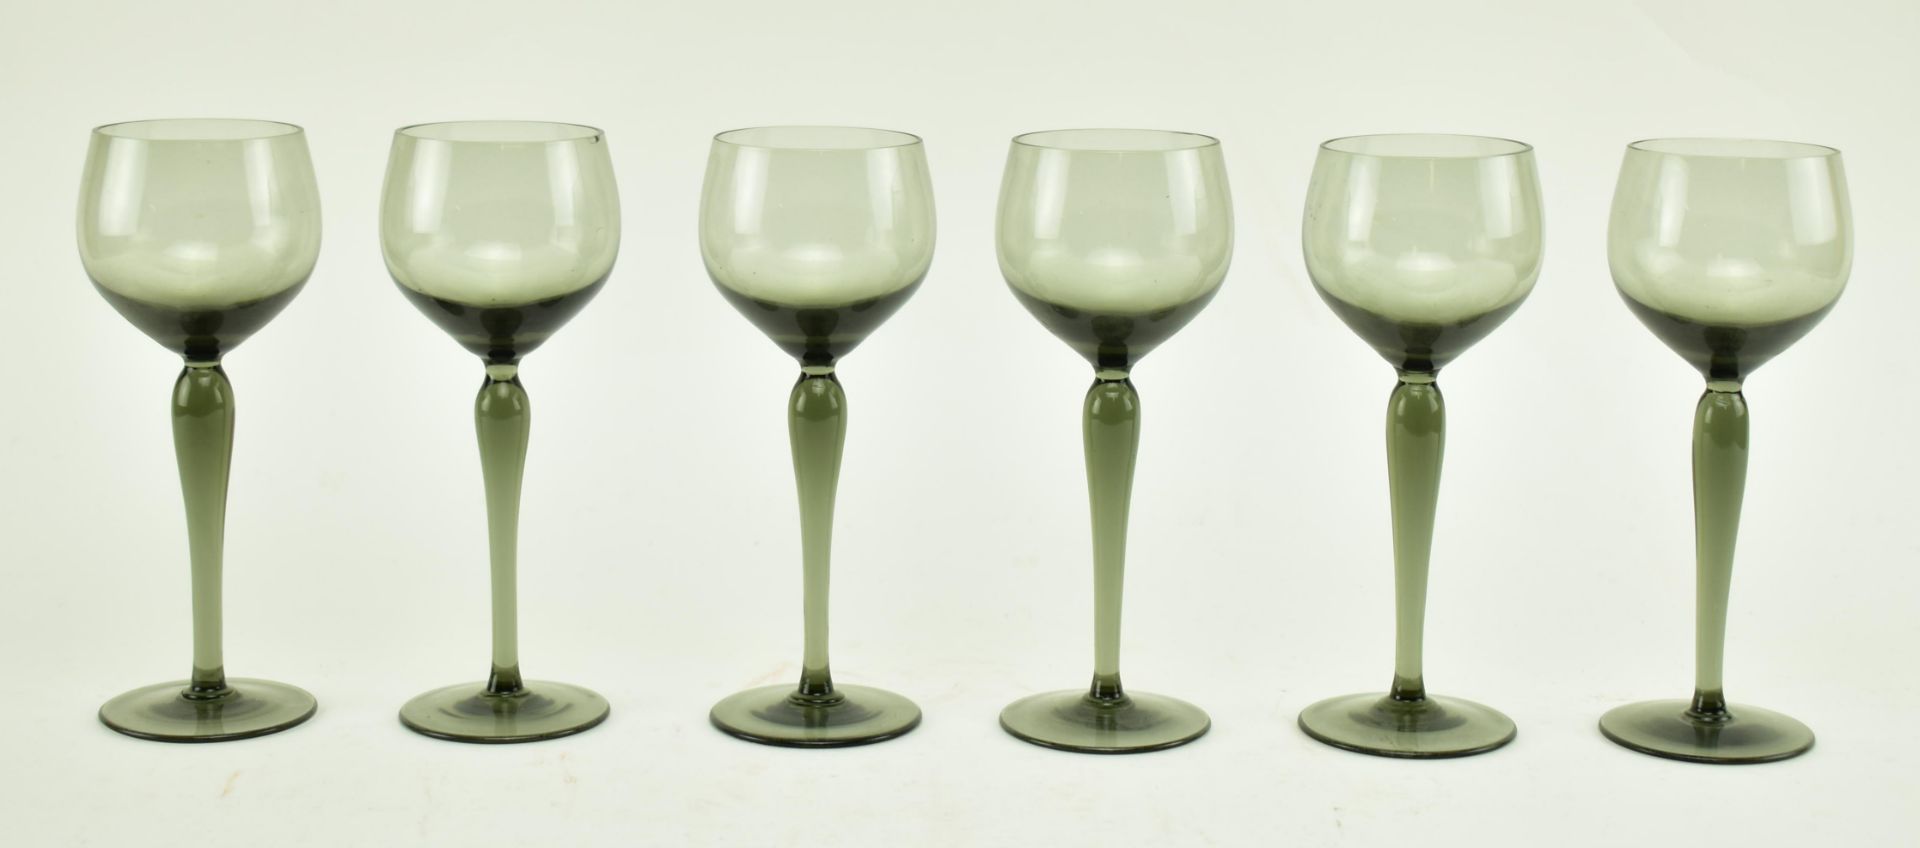 SIX SMOKED GREY GLASS WINE GLASSES & MATCHED PITCHER JUG - Image 6 of 8